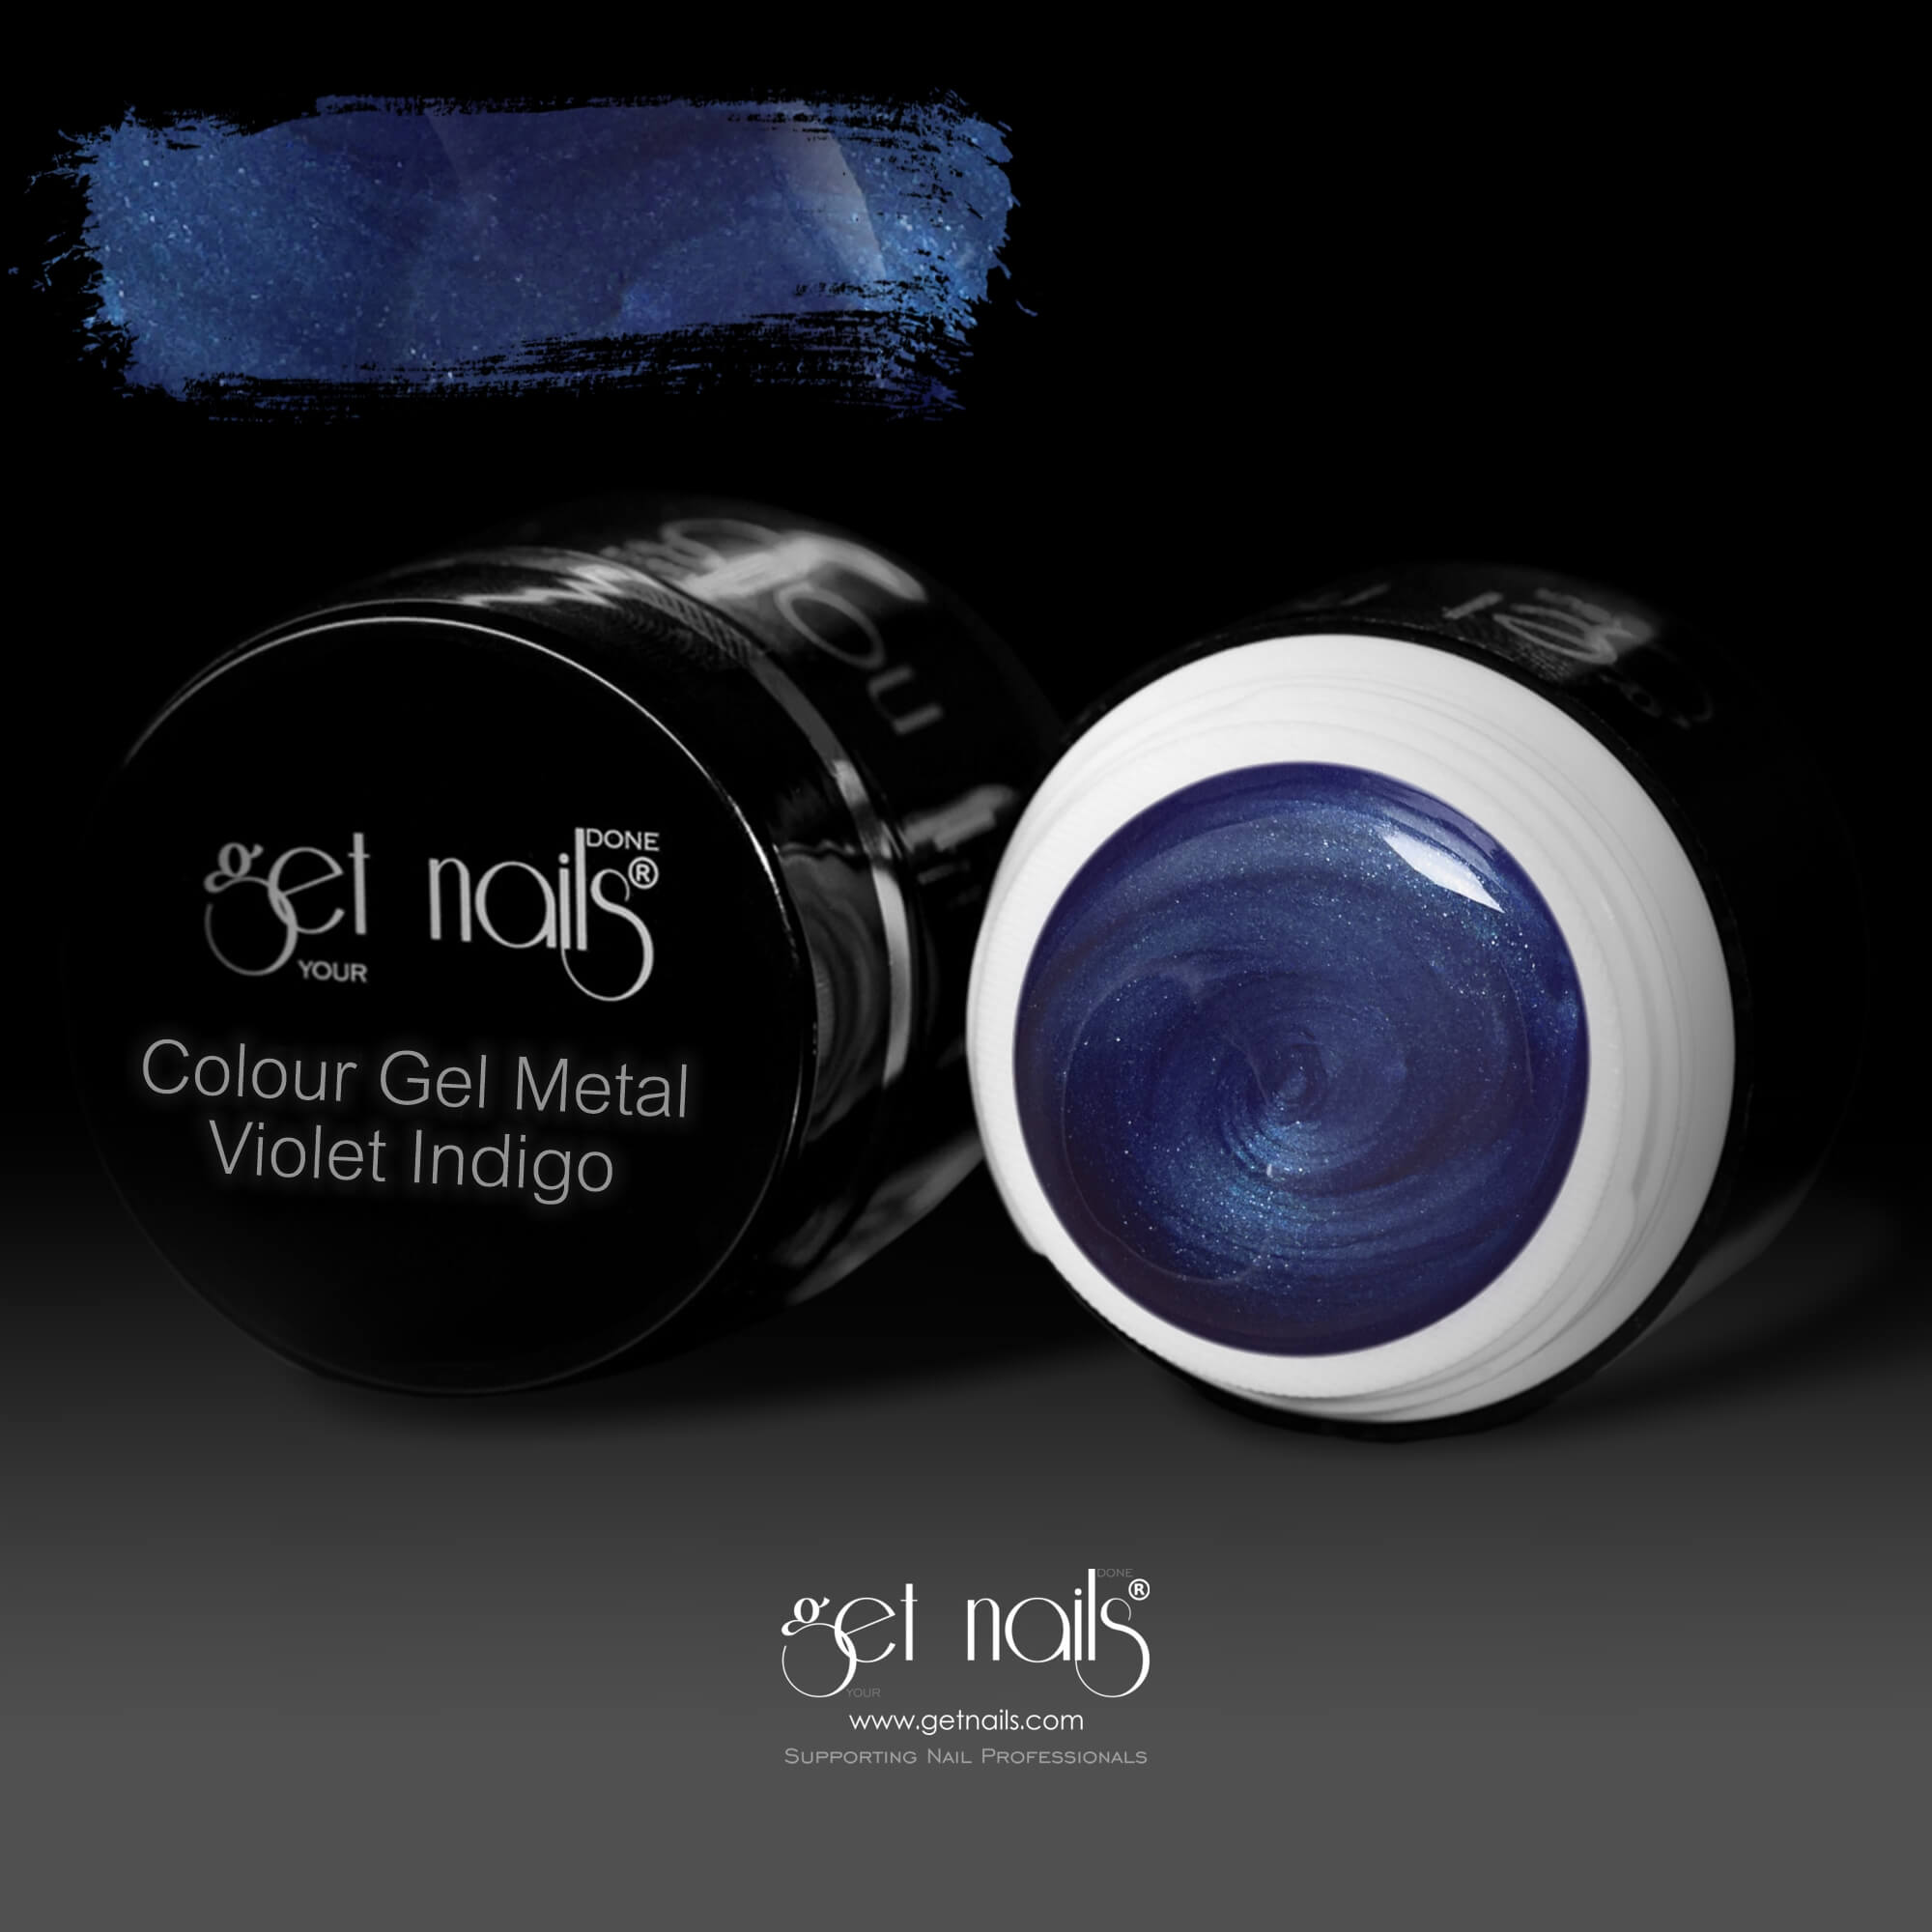 Get Nails Austria - Color Gel Metal Violet Indigo 5g